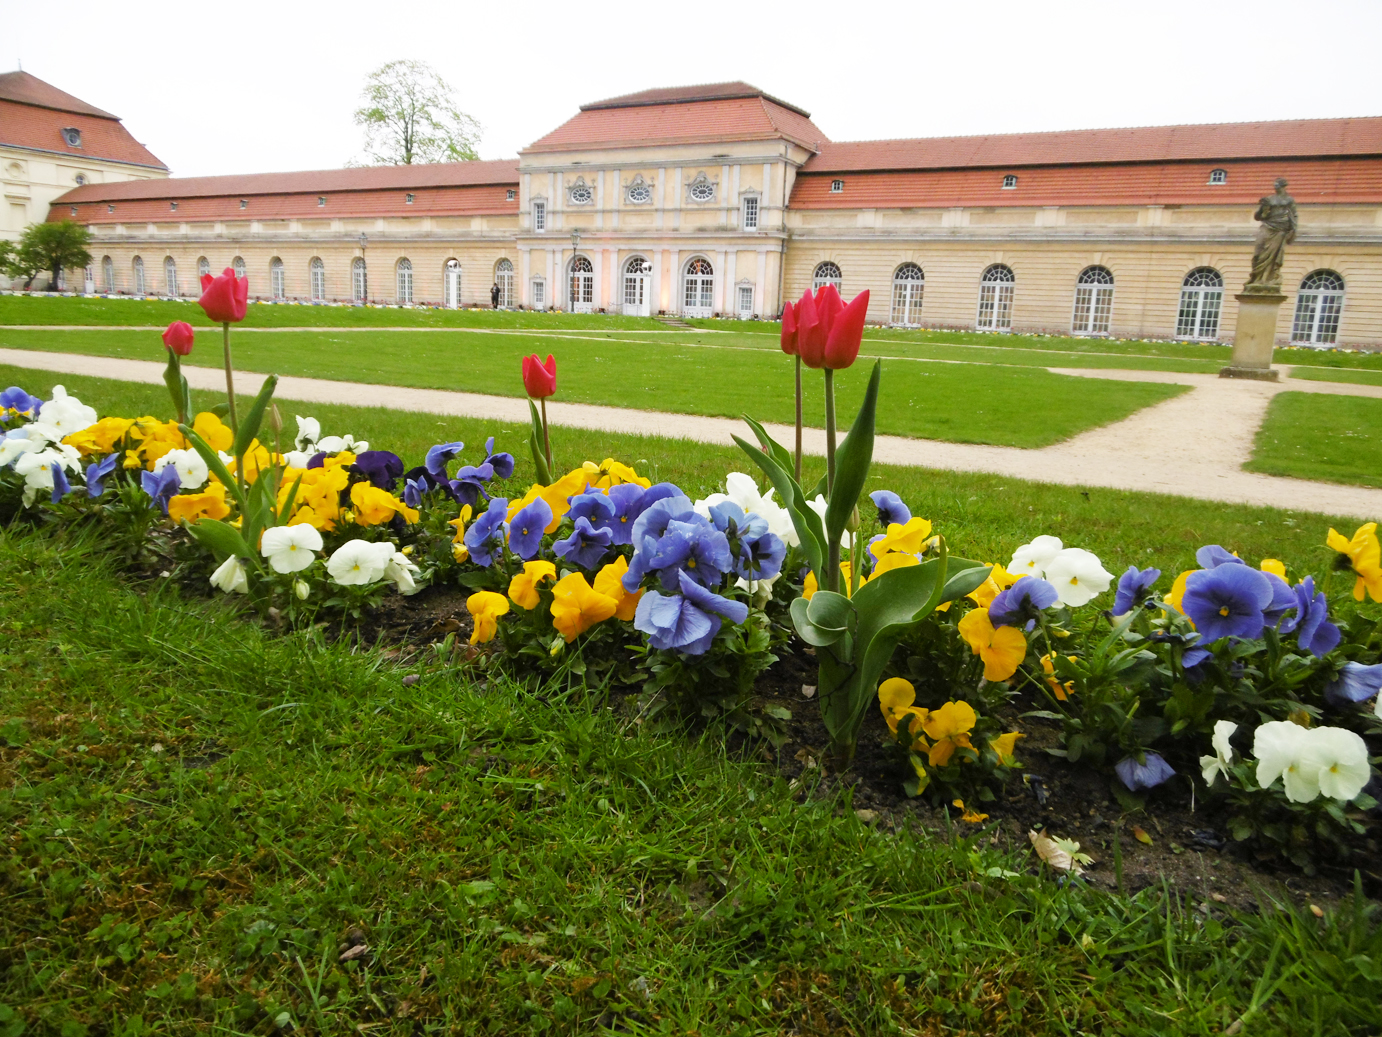 Die Orangerie des Schlosses Charlotenburg in frühlingshaftem Ambiente